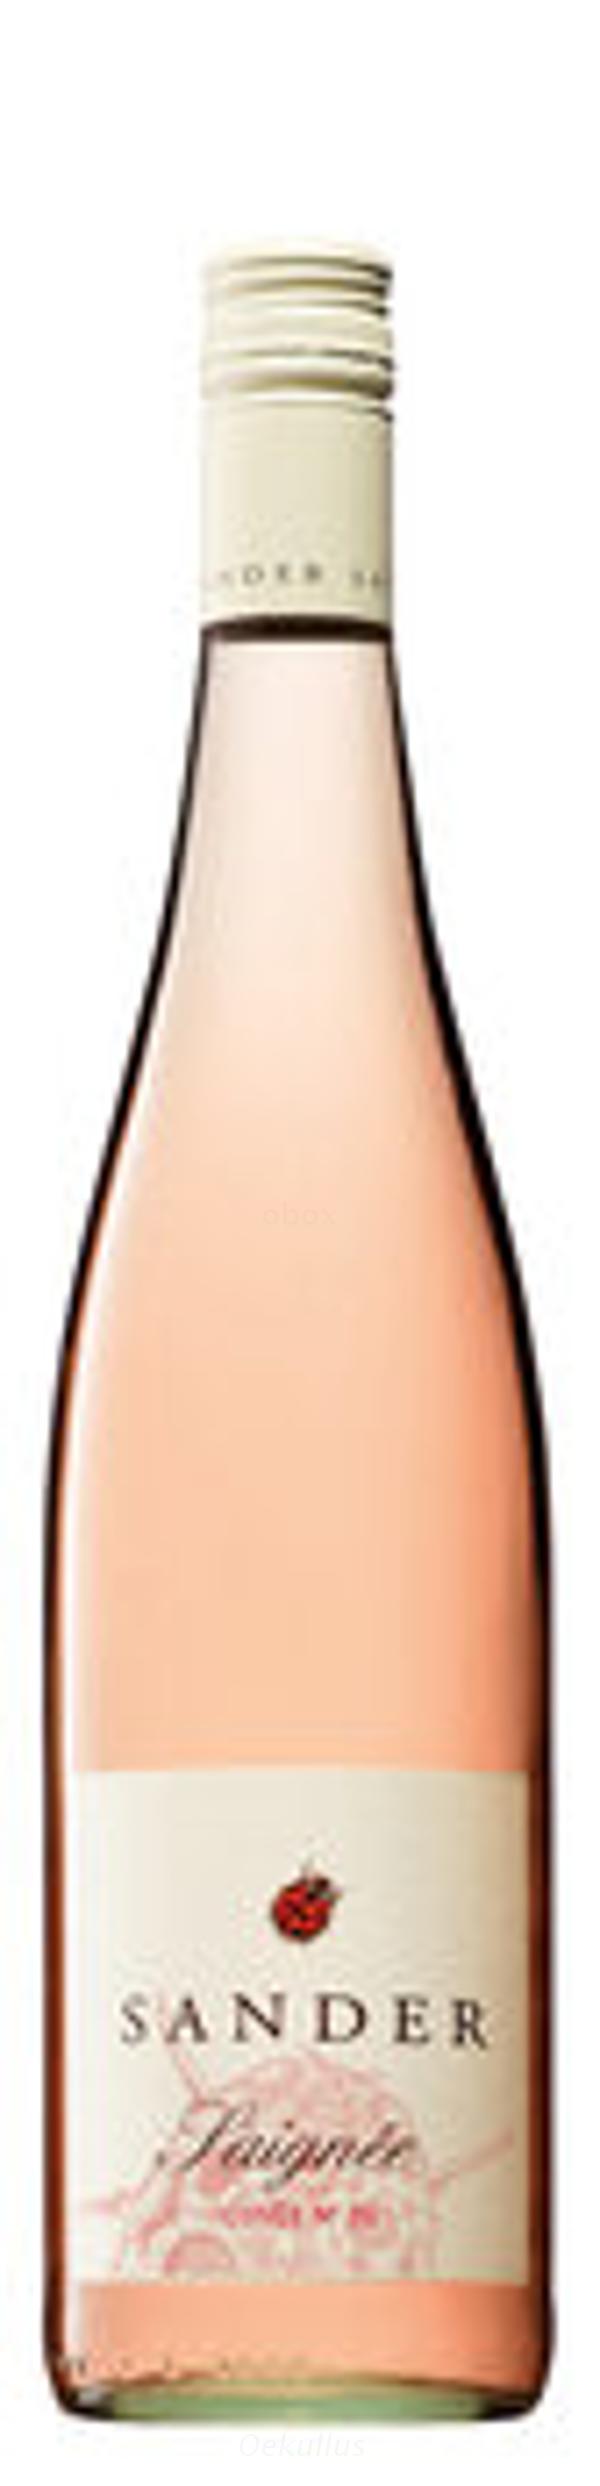 Produktfoto zu Cuvée Fass 39 Rosé